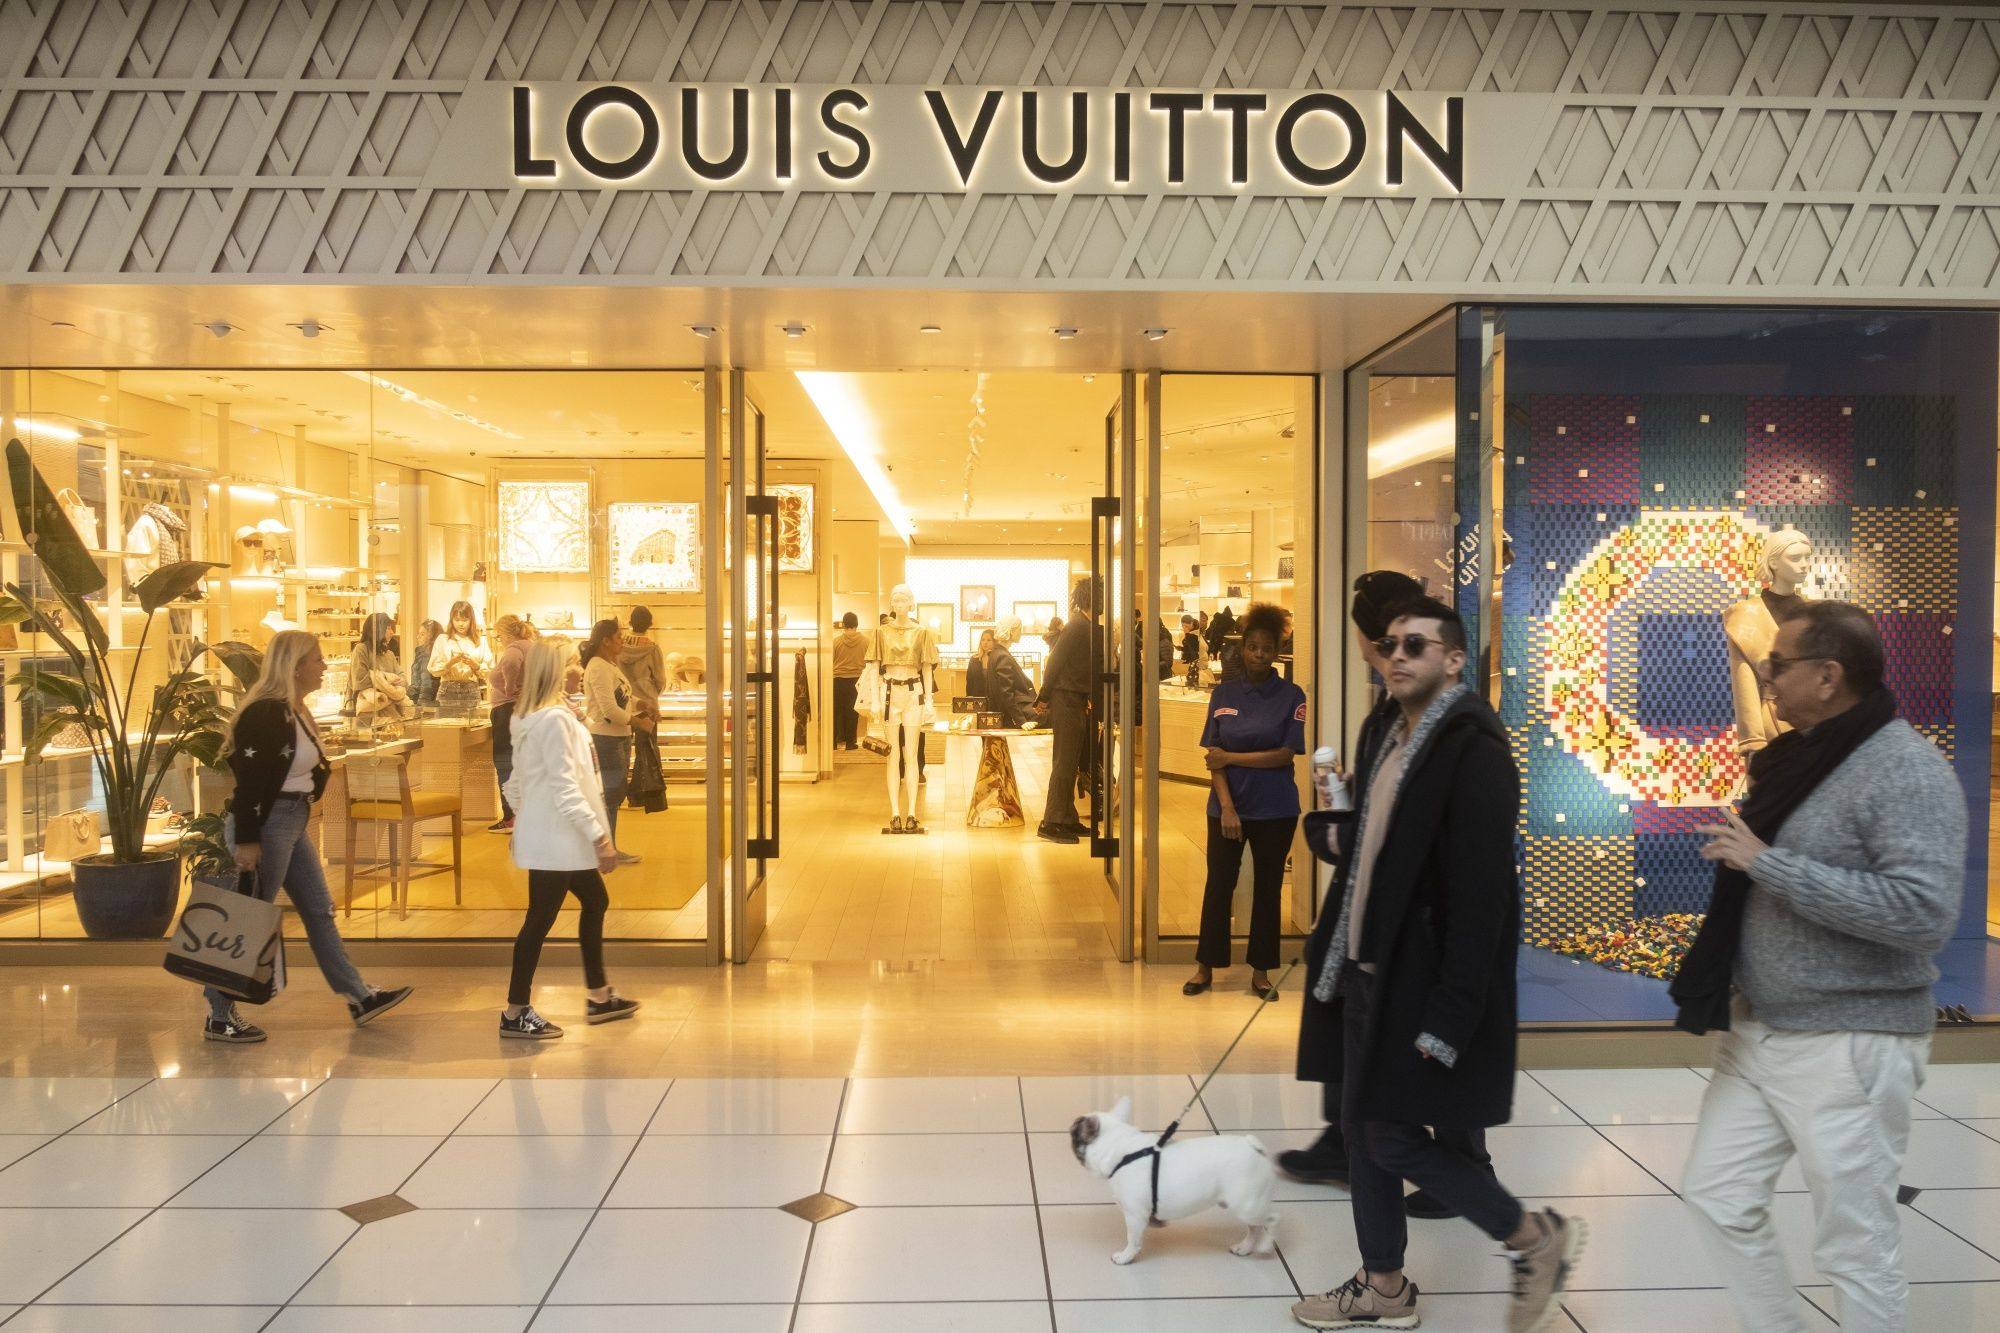 Bernard Arnault's Son Takes On Wider Role at Billionaire's Luxury Empire -  BNN Bloomberg